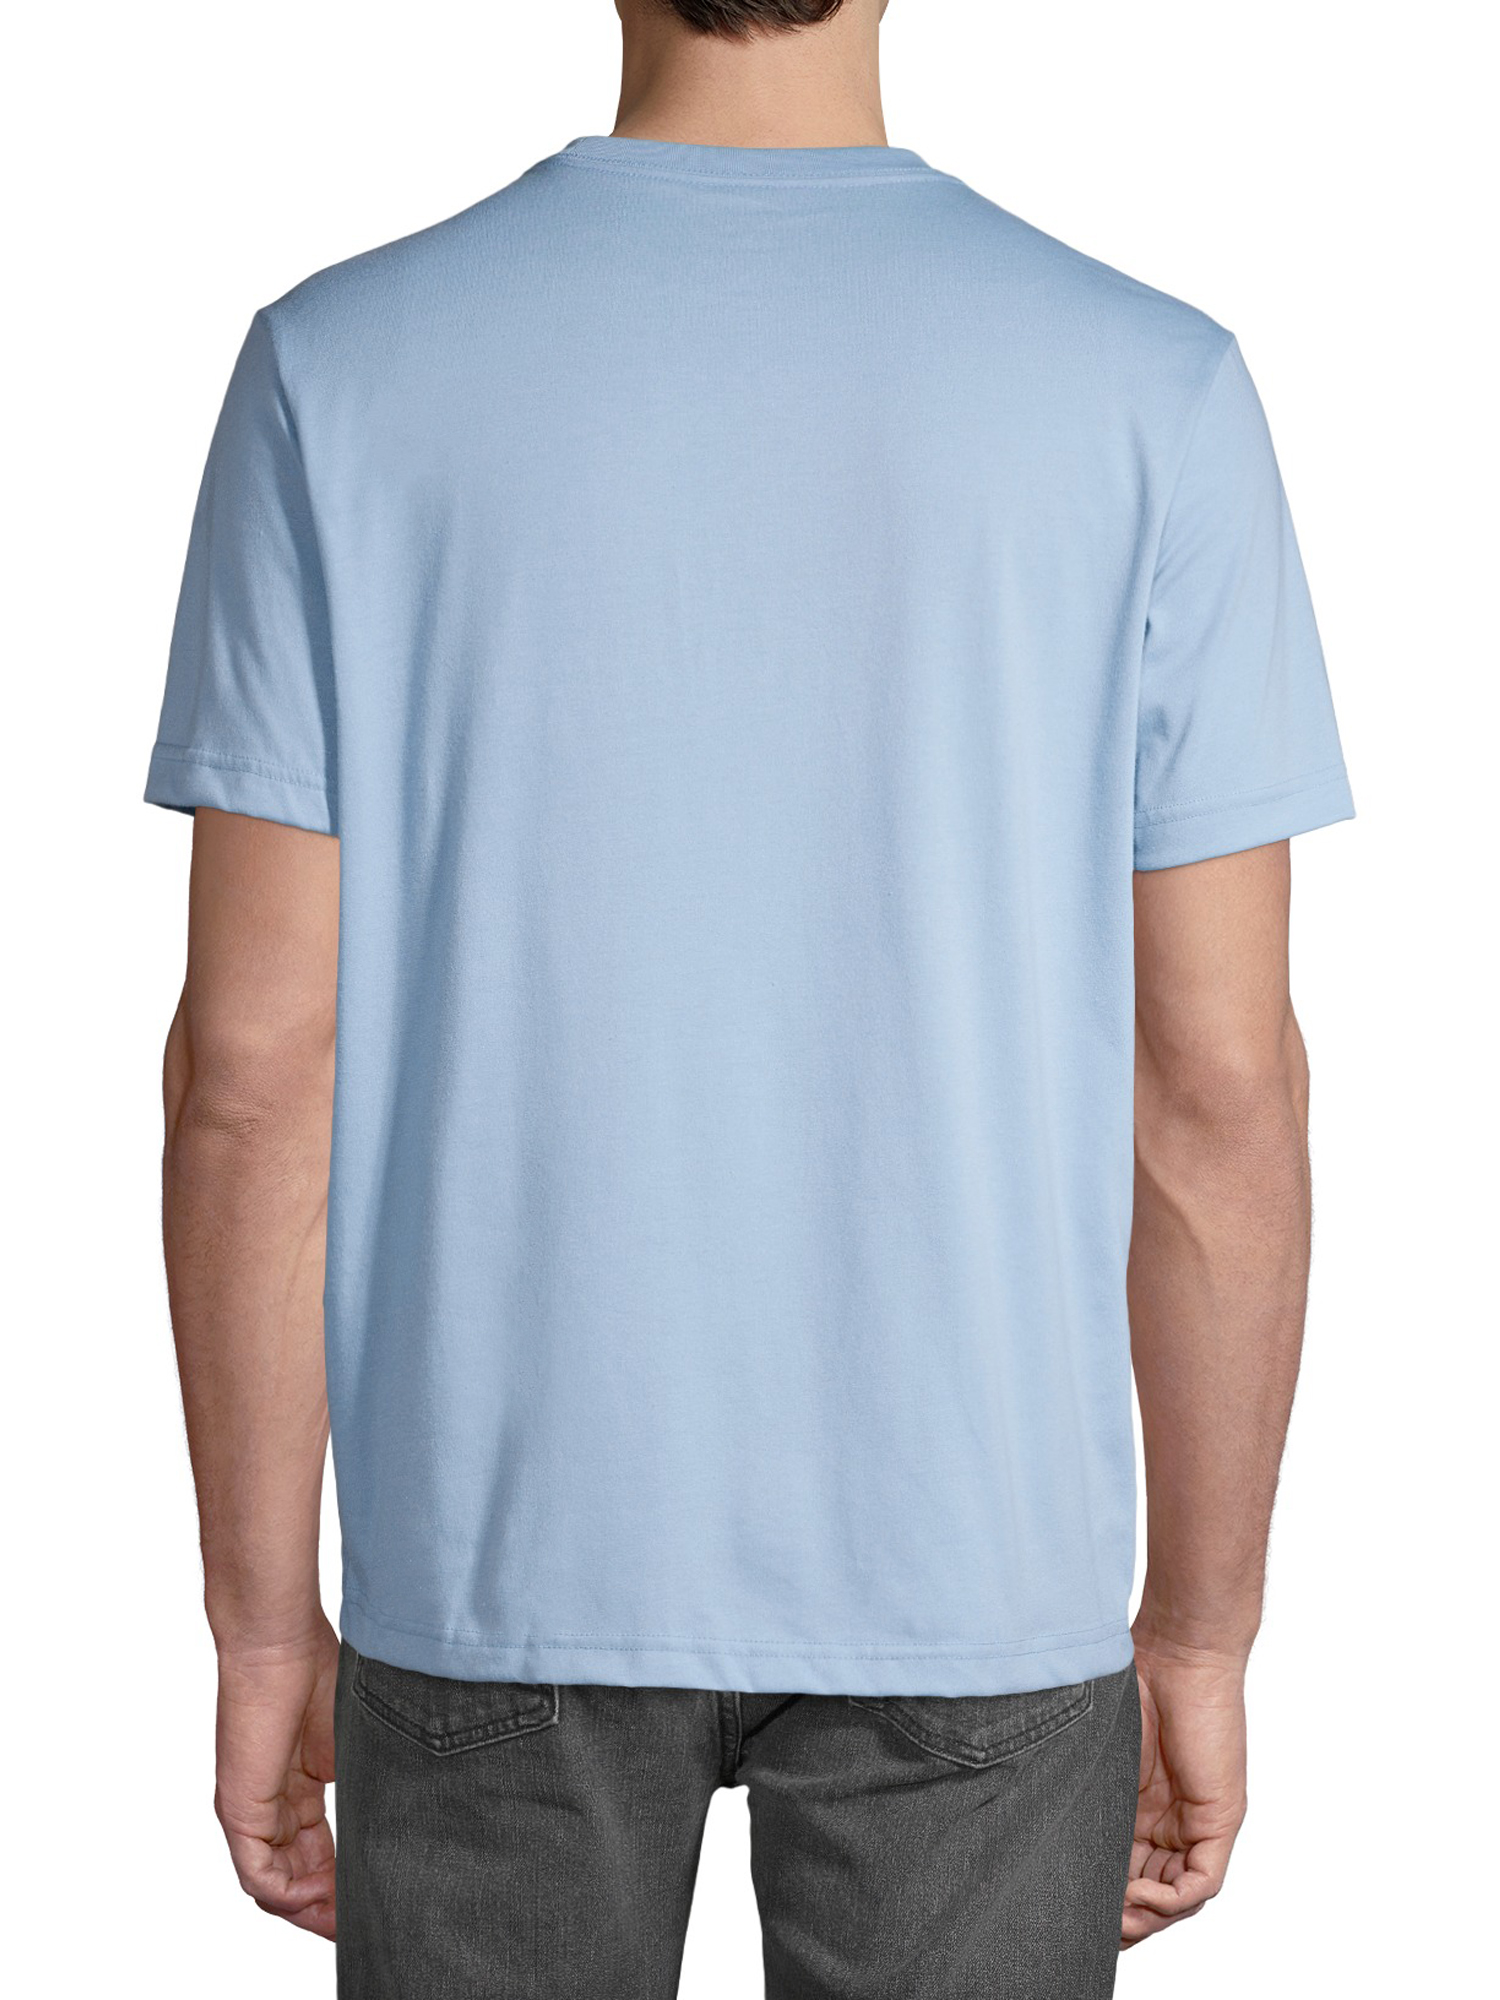 George Men's and Big Men's Short Sleeve Crewneck T-Shirt - image 3 of 5